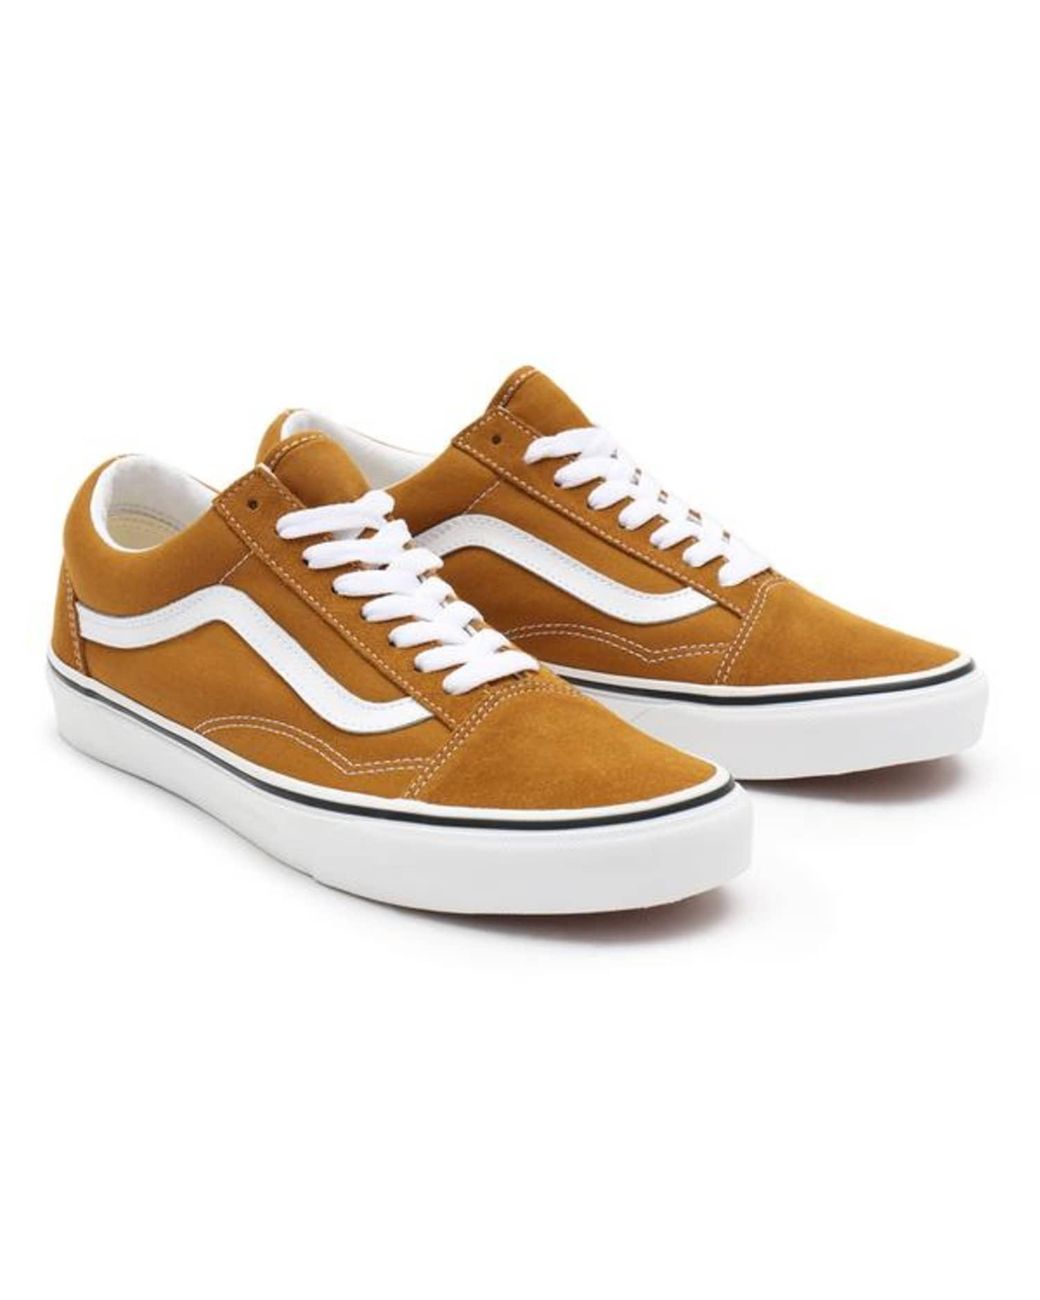 Vans Old Skool Shoes Golden Brown True for | Lyst